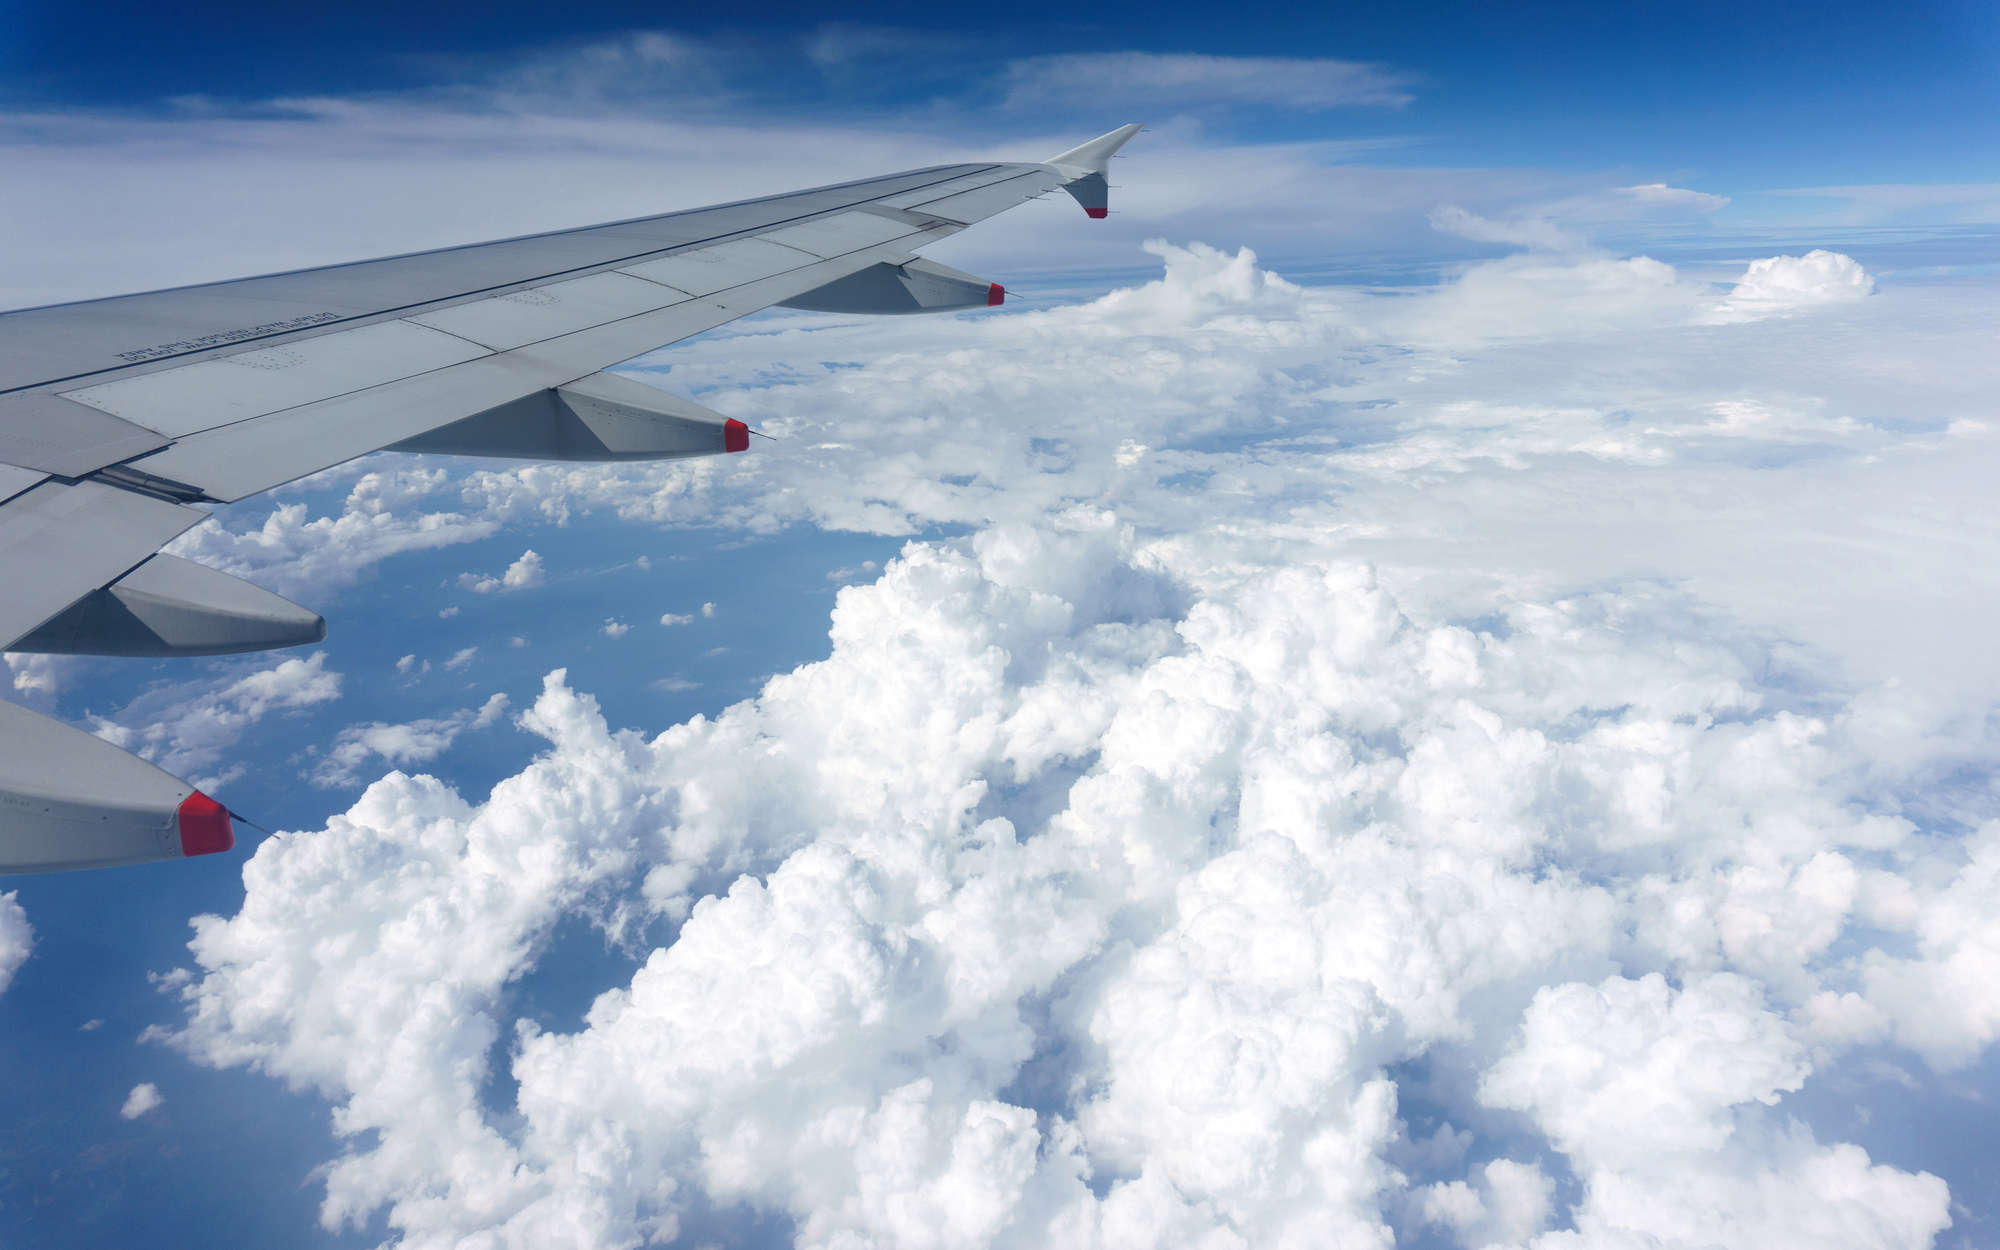             Photo wallpaper Airplane above the clouds - Matt smooth fleece
        